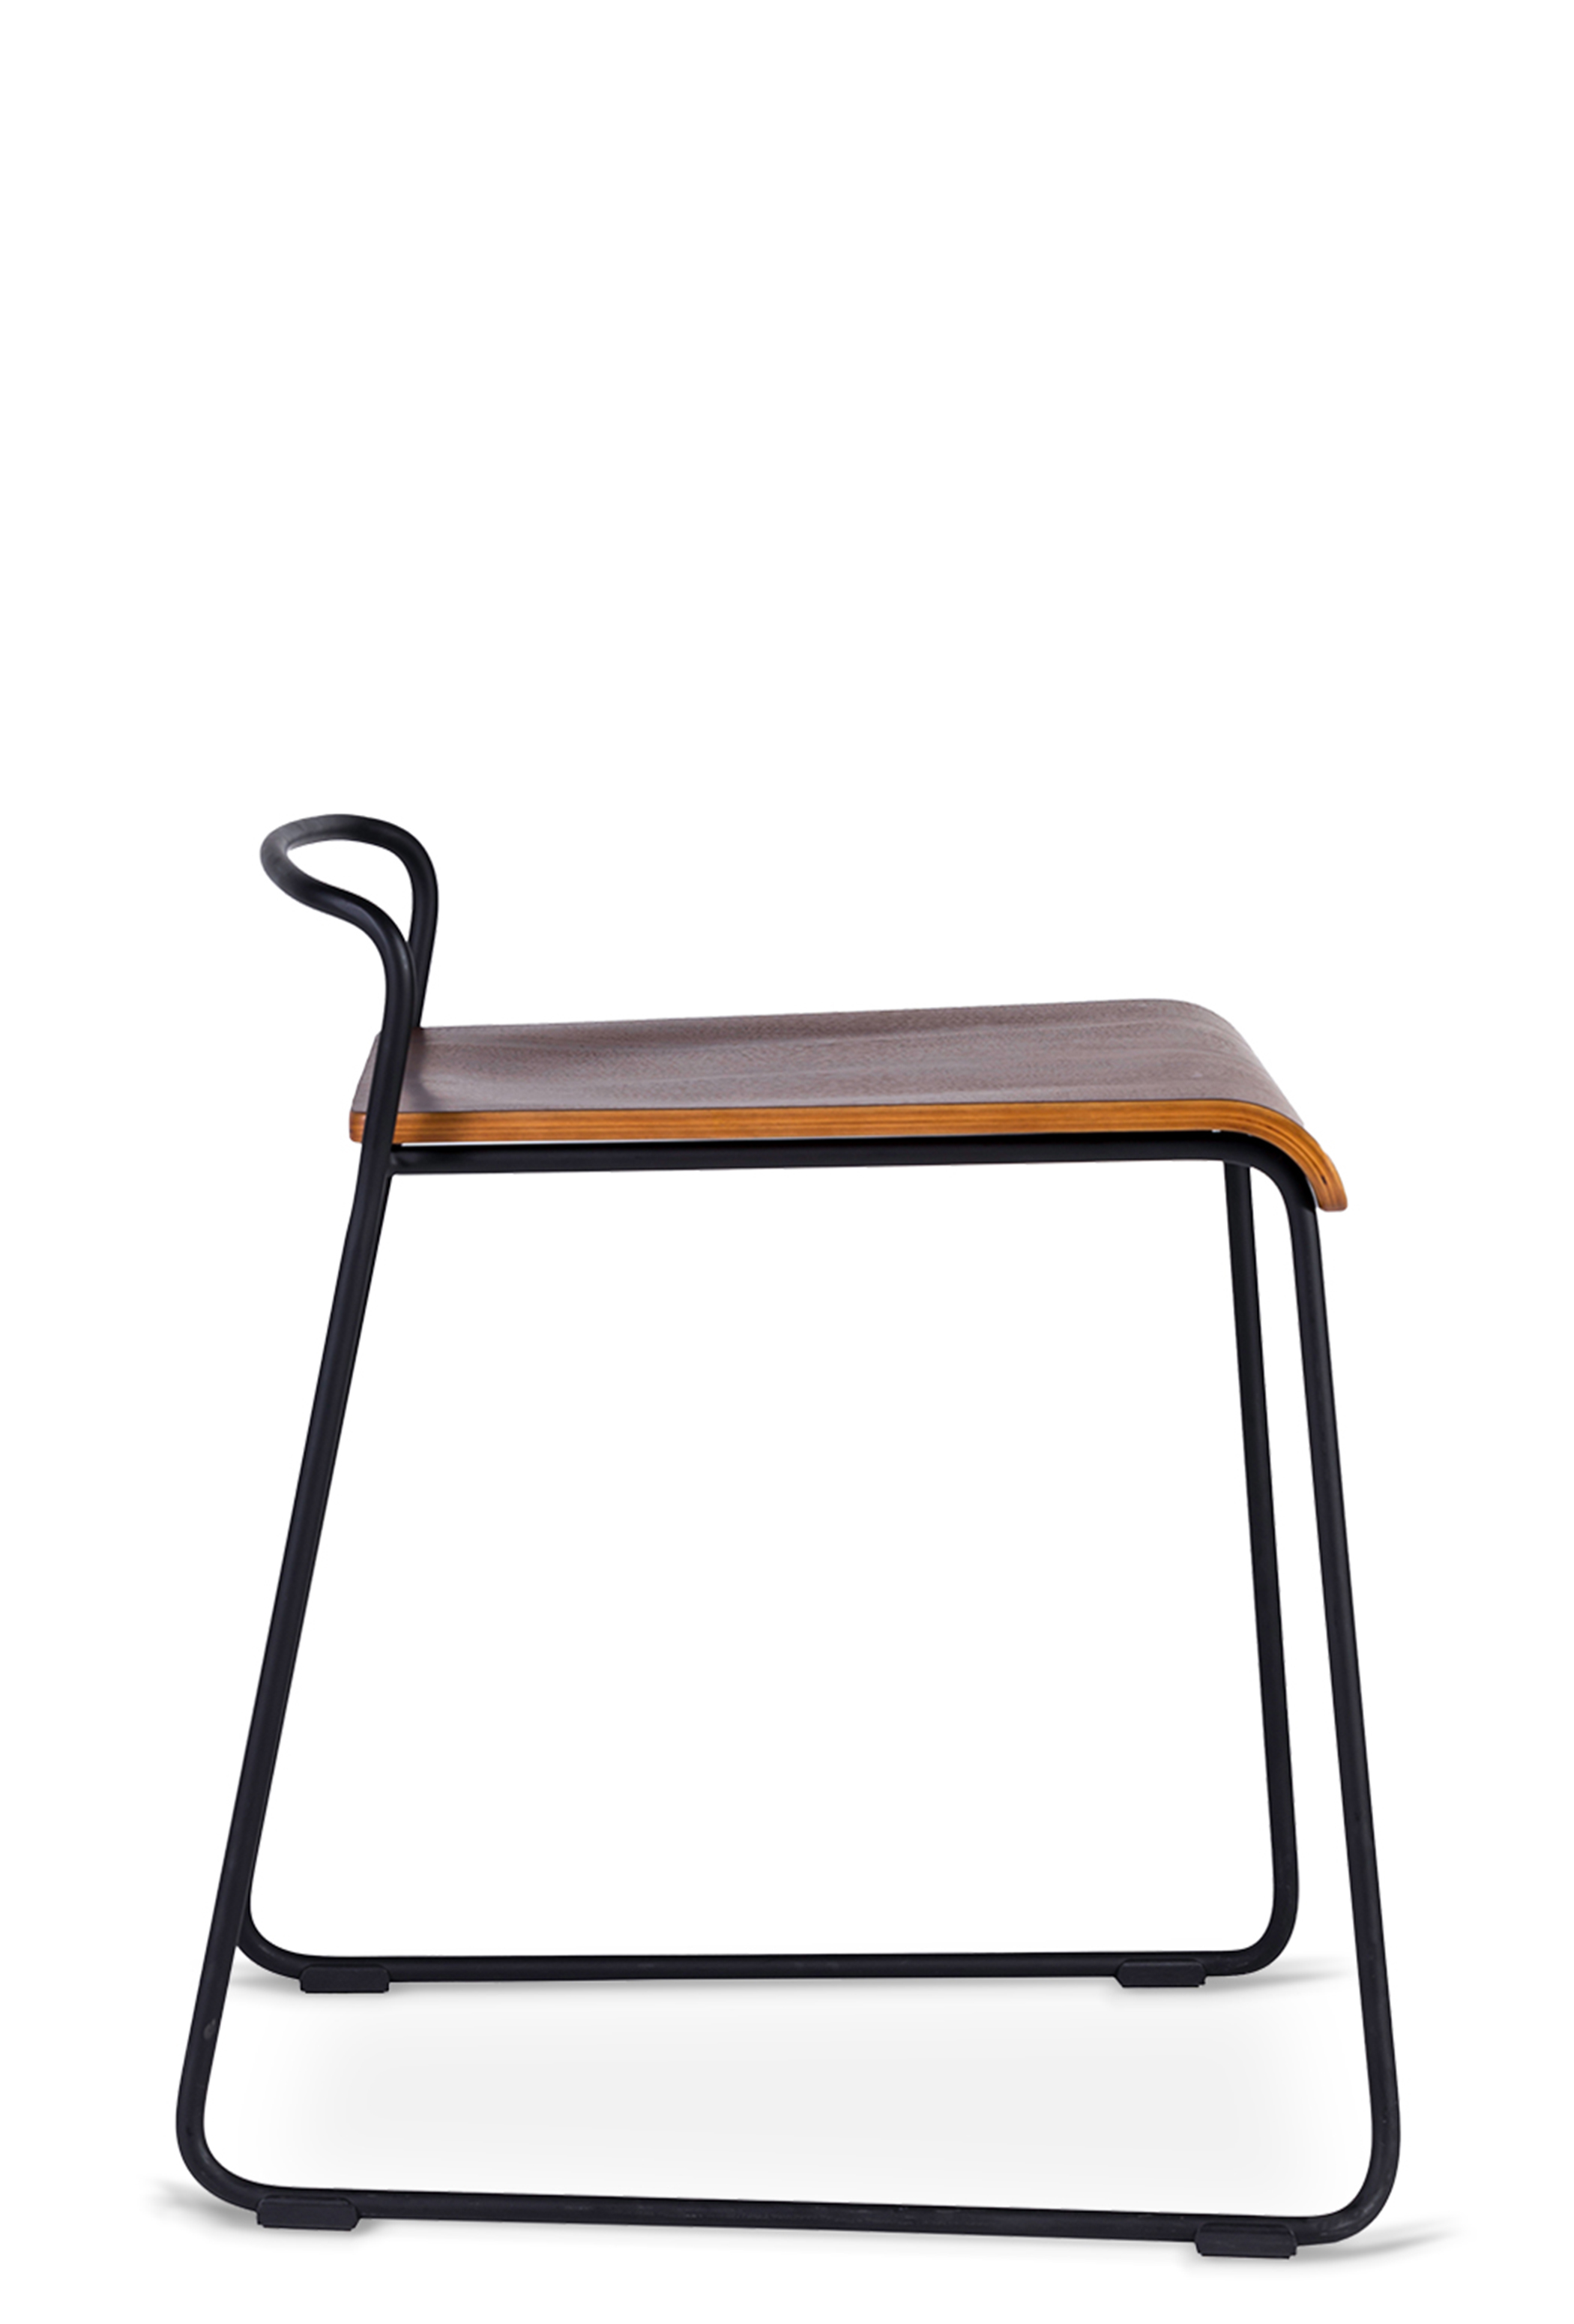 WS - Transit low stool - Walnut (Side)